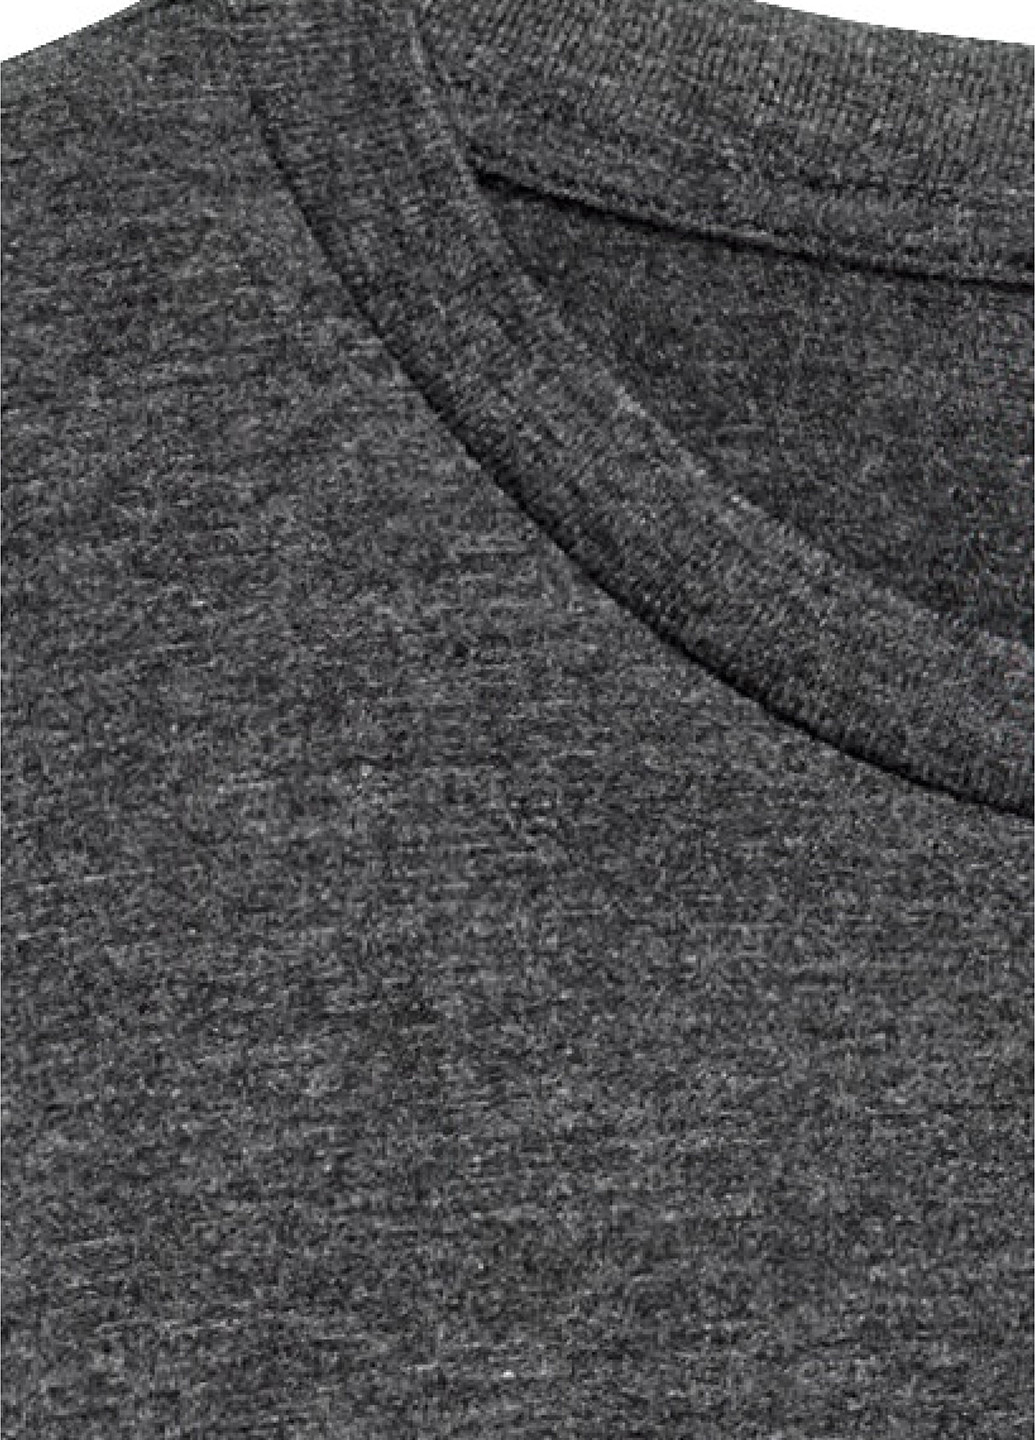 Темно-серая футболка H&M